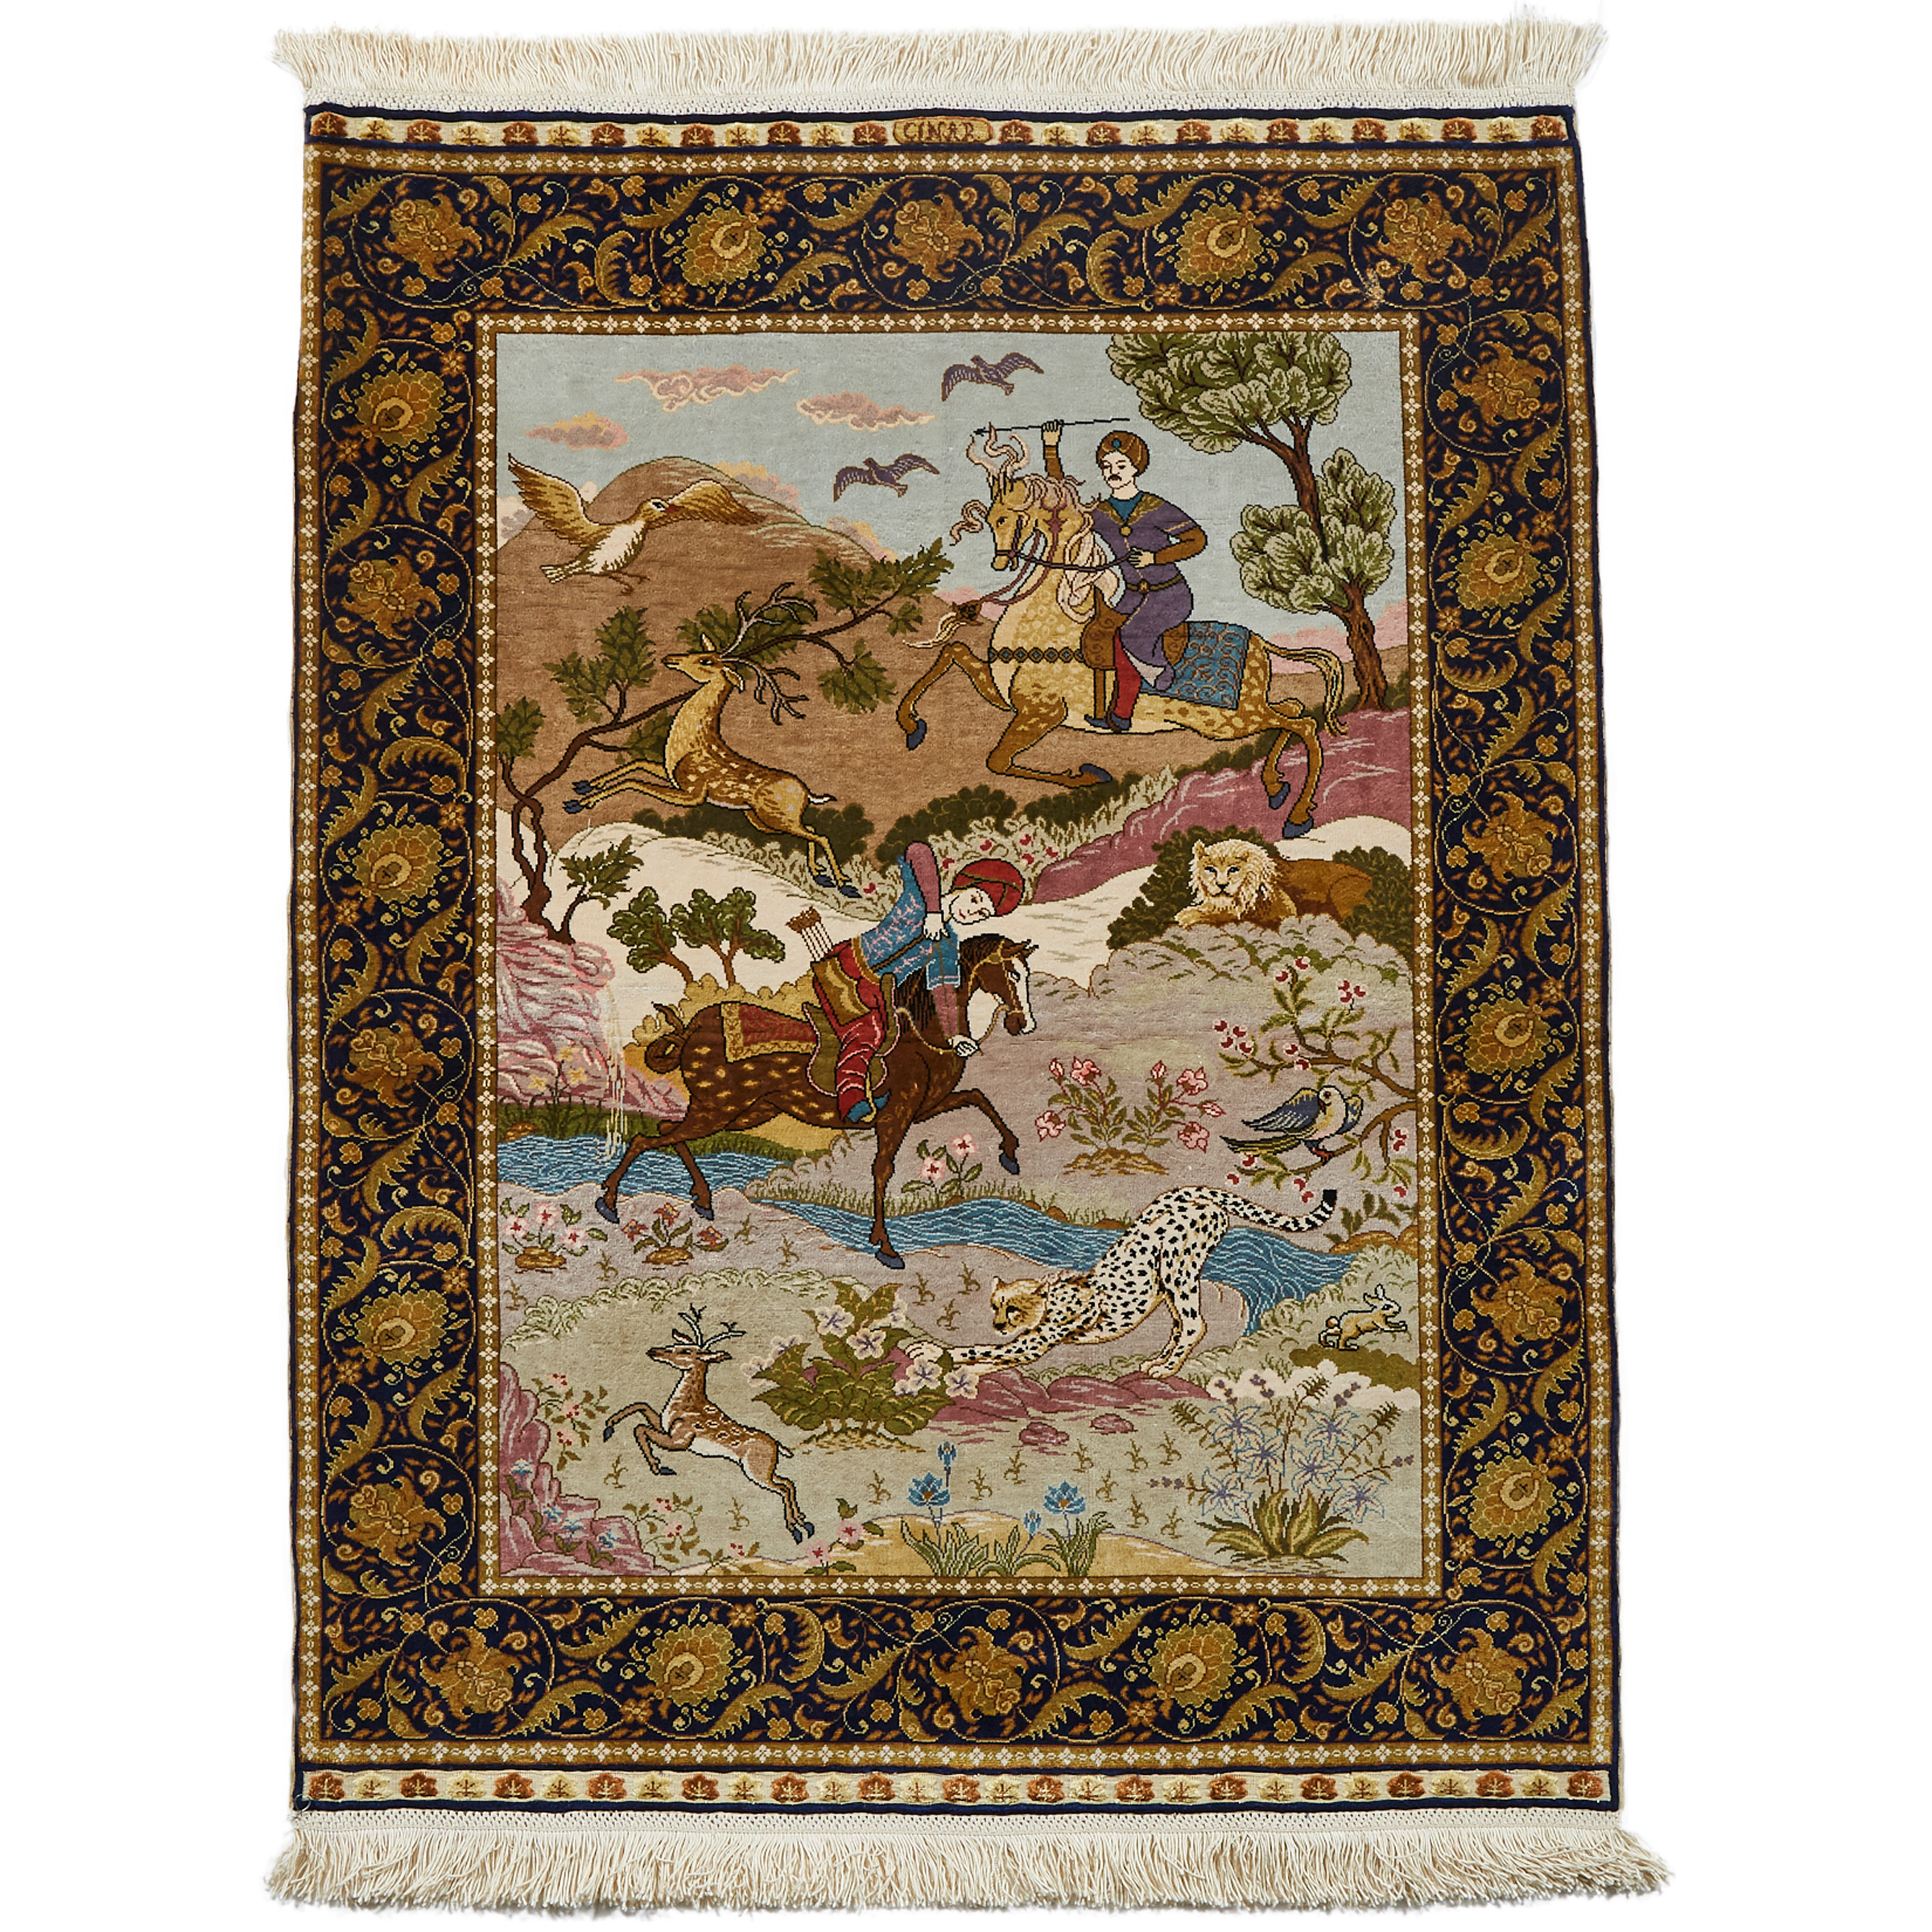 Hereke Sultani Silk Pictorial Rug, Turkish, signed Cinar, mid 20th century